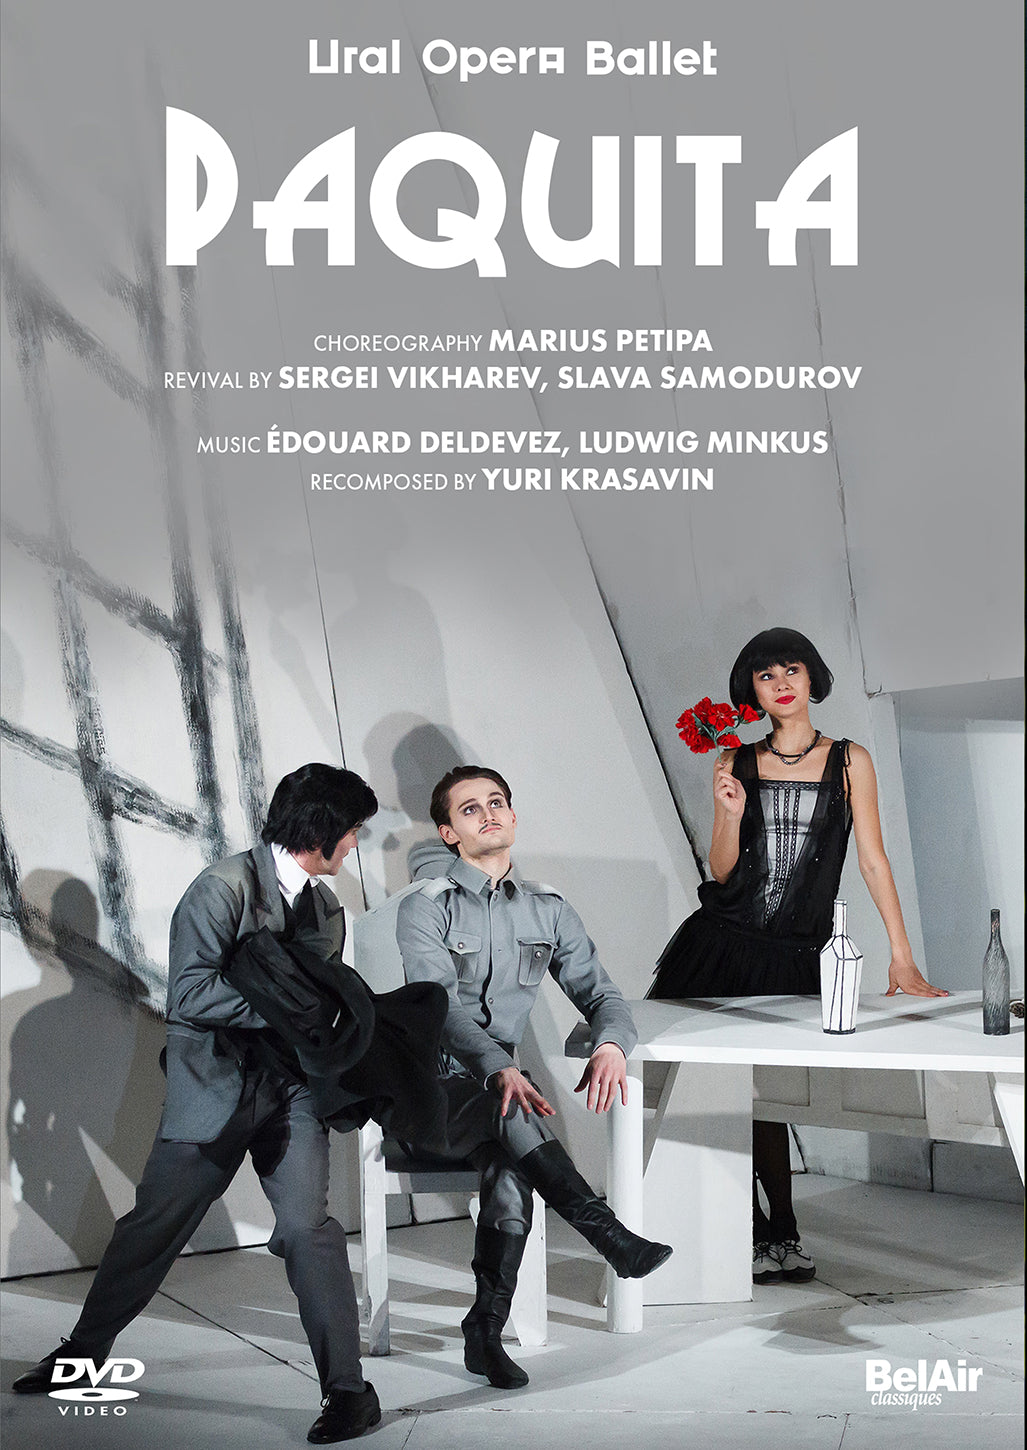 Deldevez, Krasavin & Minkus: Paquita / Ural Opera Ballet